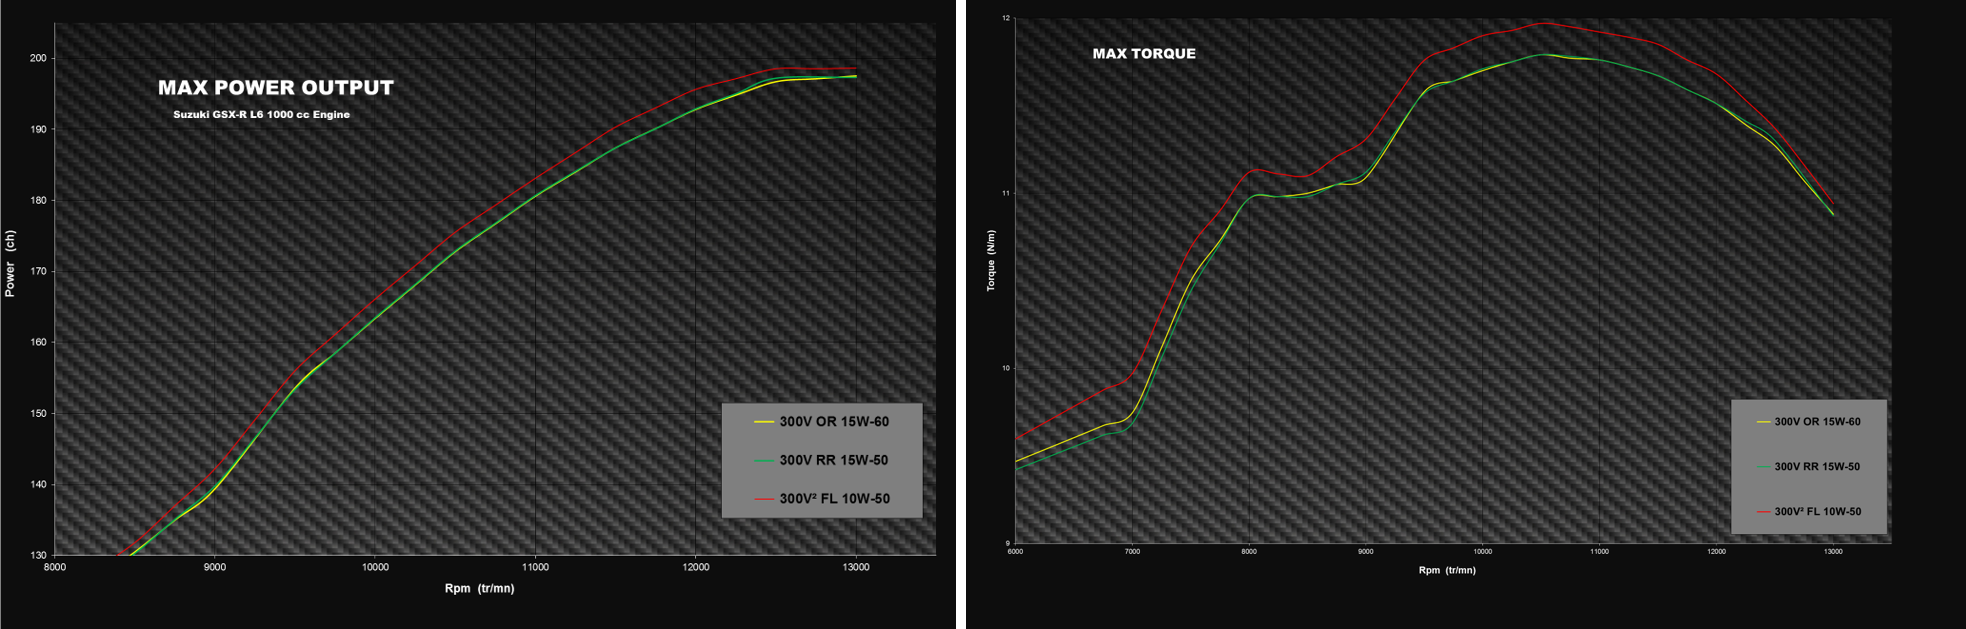 сравнение показателей с эксплуатацией мотоцикла на моторных маслах 300V Road Racing 15W50 и 300V Off Road Racing 15W50